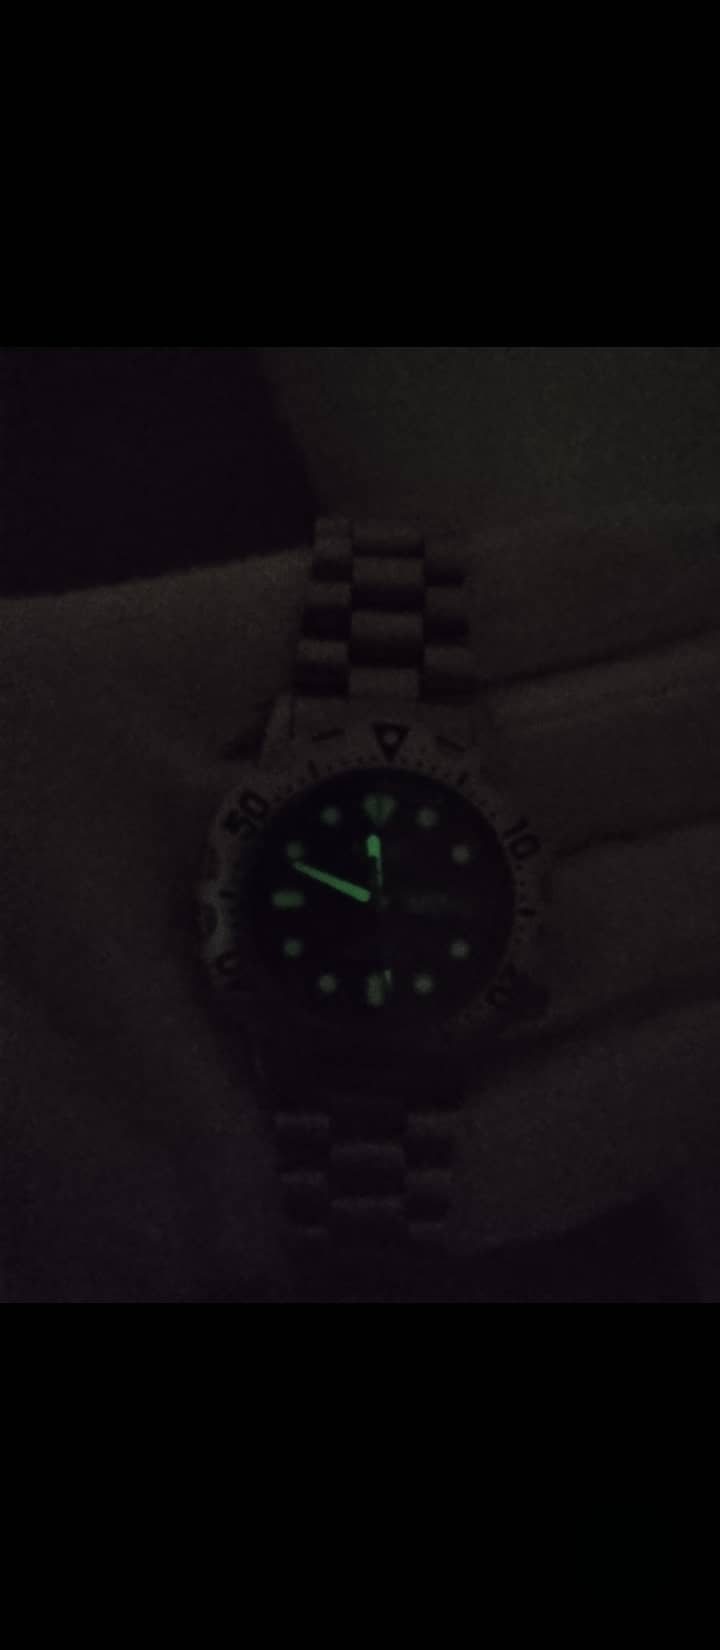 Branded Watch 4